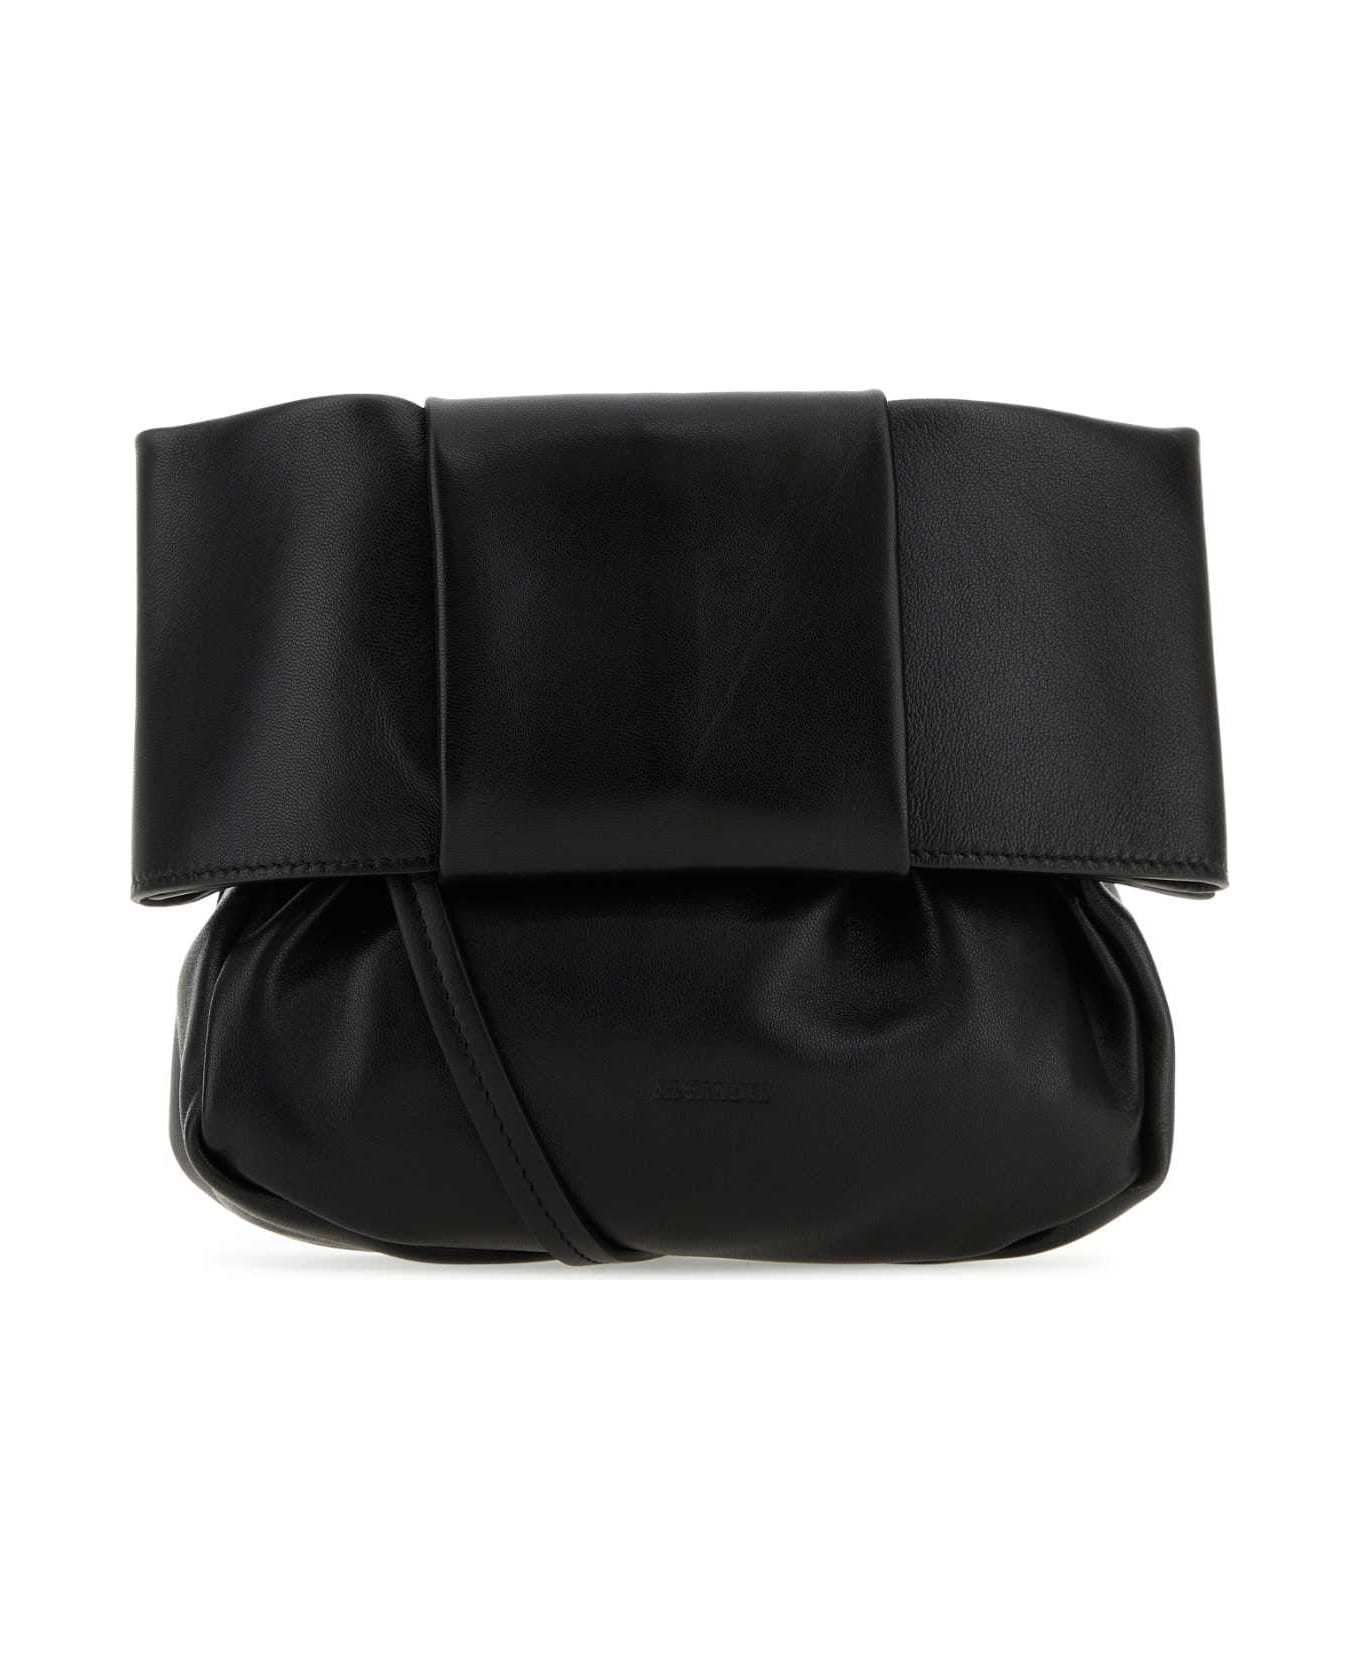 Jil Sander Black Nappa Leather Bucket Bag - 001